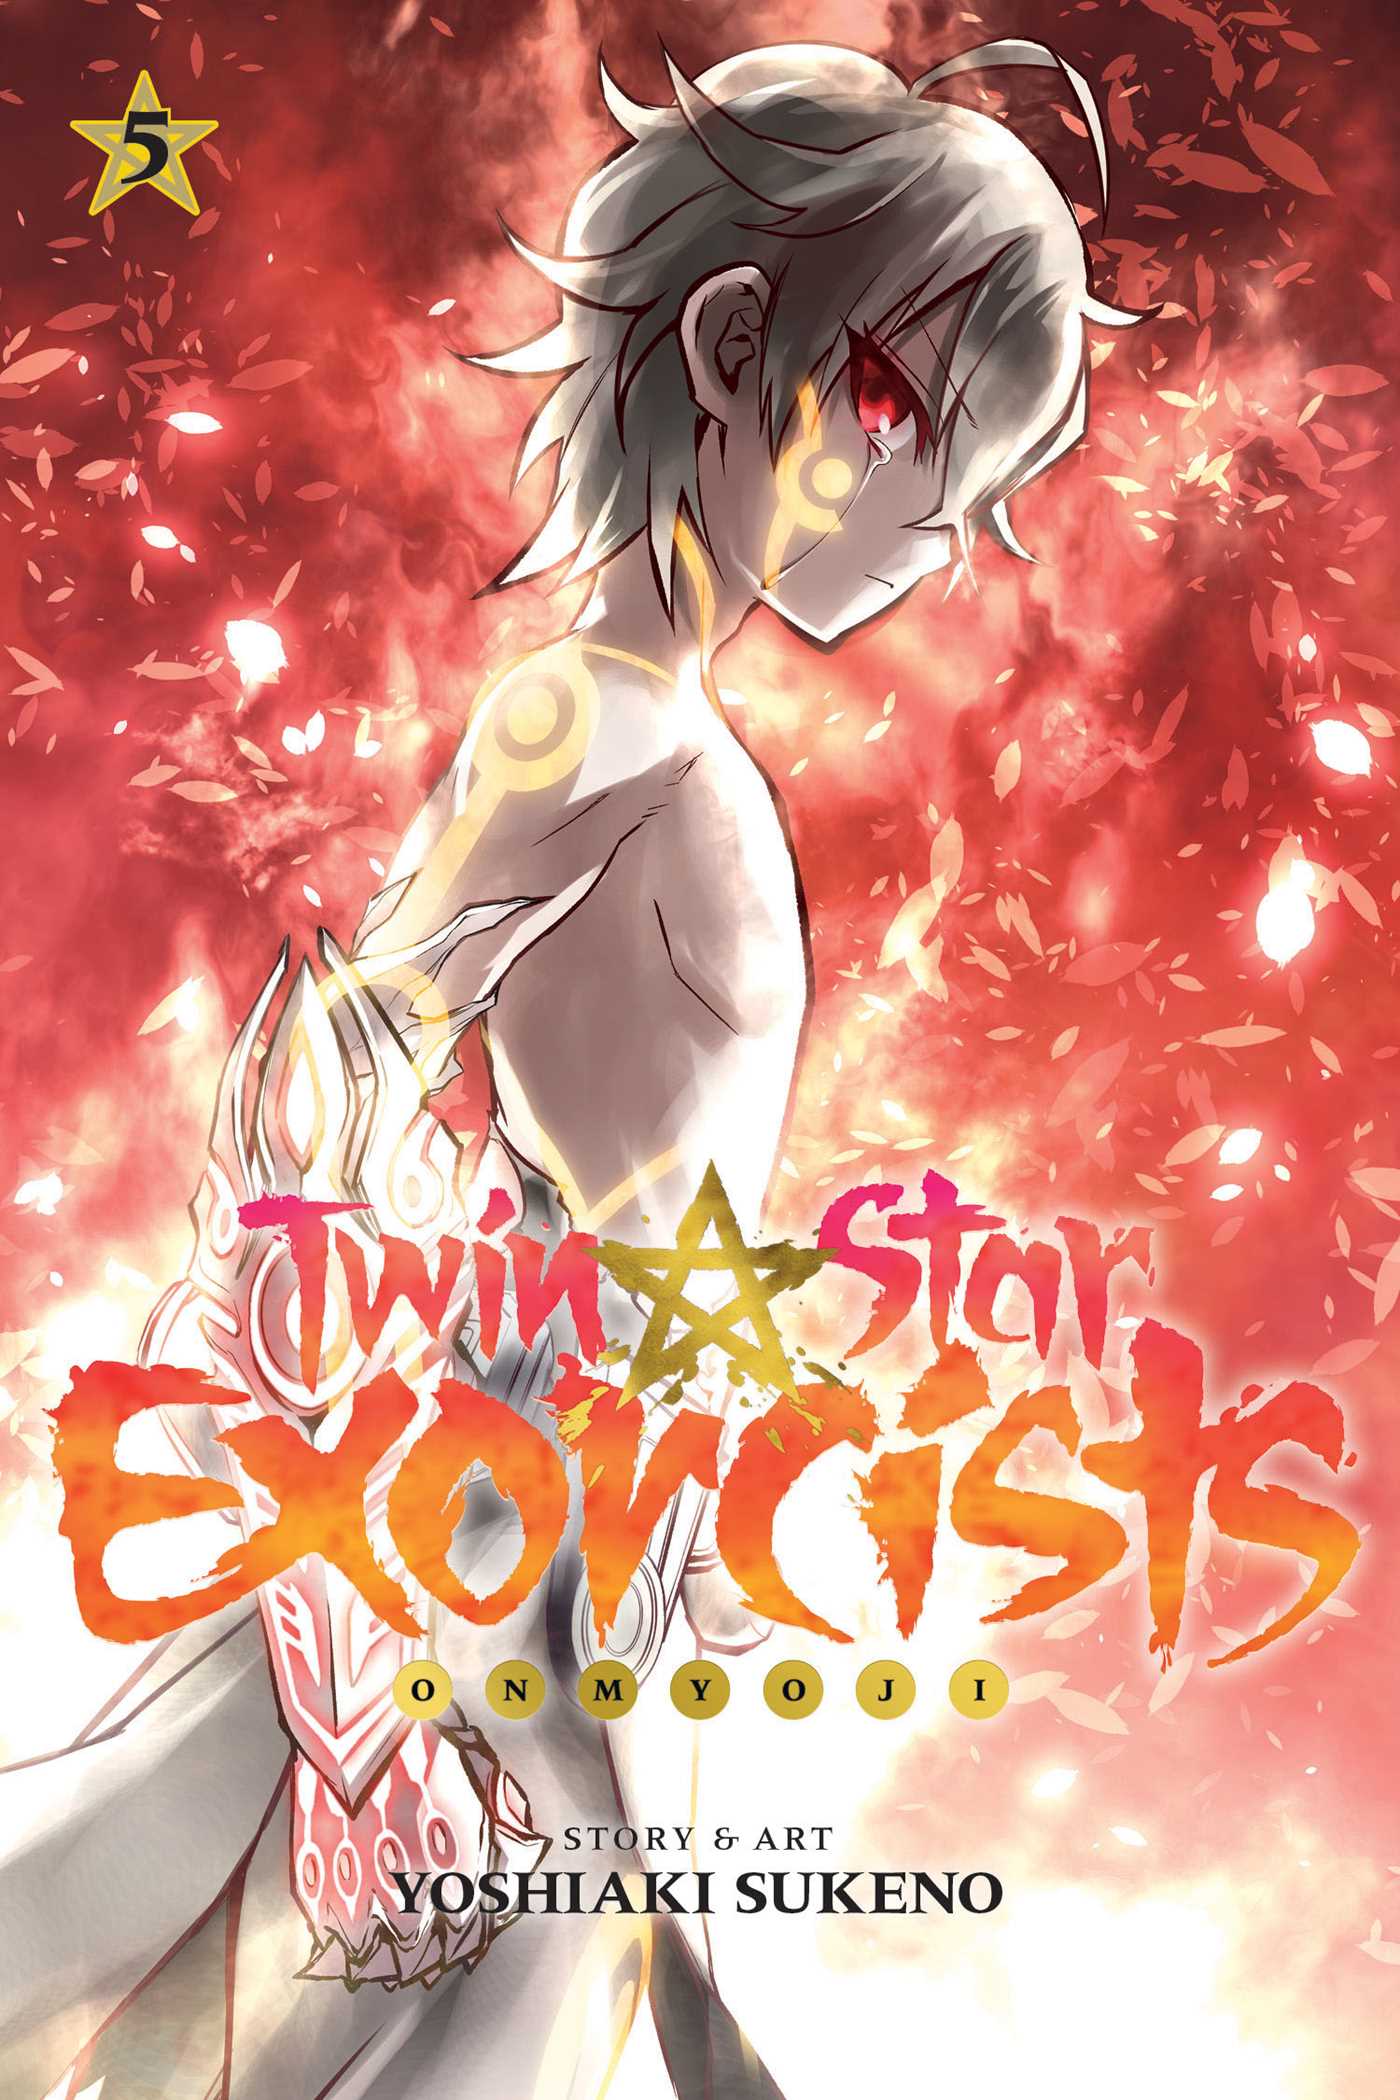 ART] Twin Star Exorcists: Resonance [Twin Star Exorcists] : r/manga